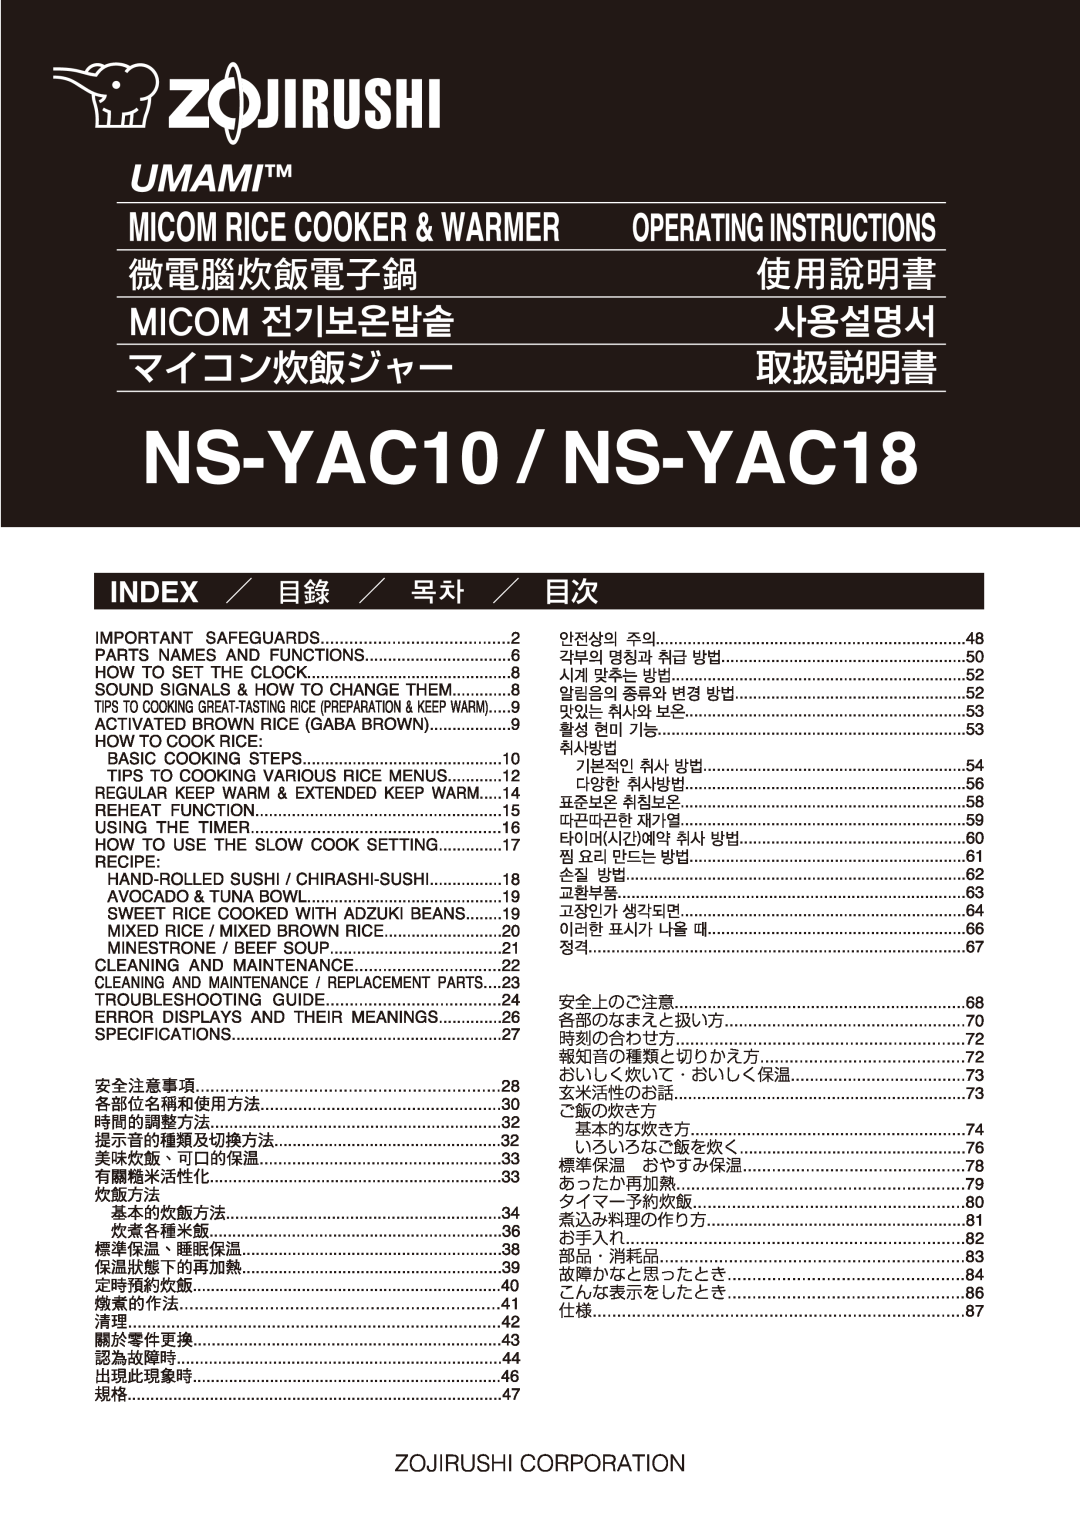 Zojirushi NS-YAC18, NS-YAC10 manual 